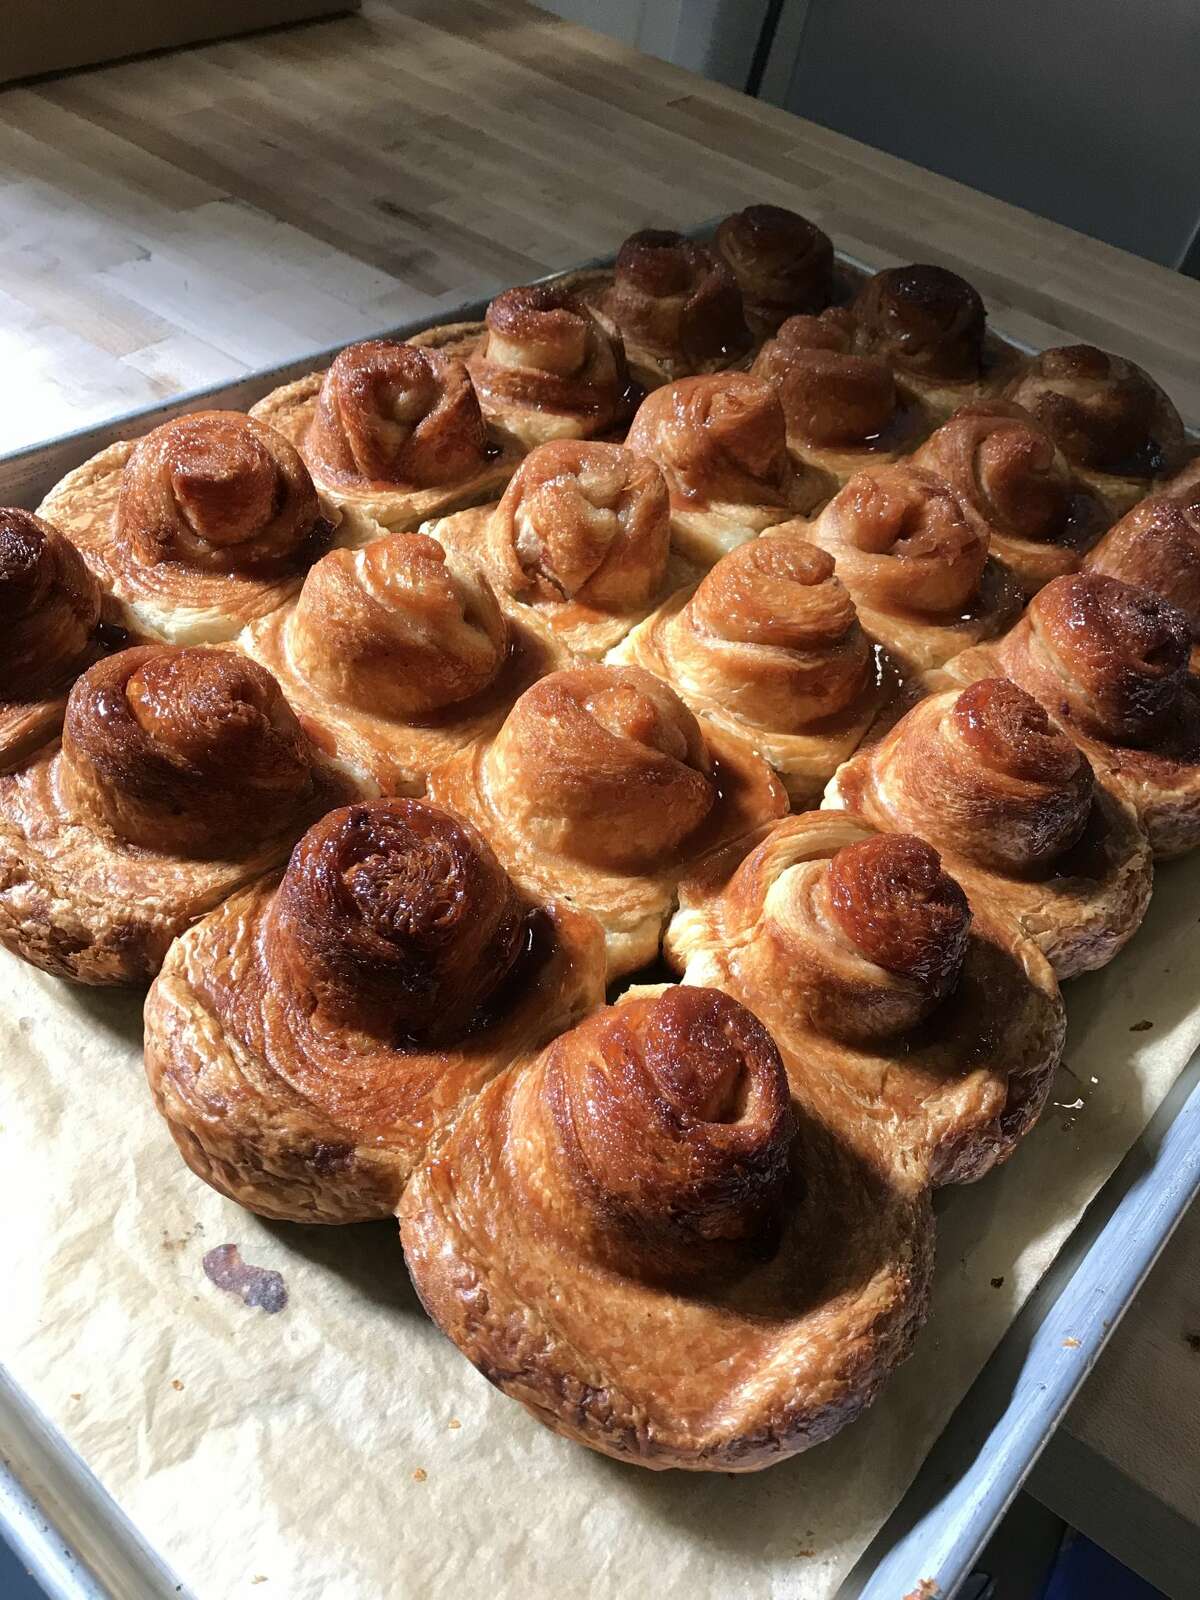 Morning buns at the Tartine kitchen.